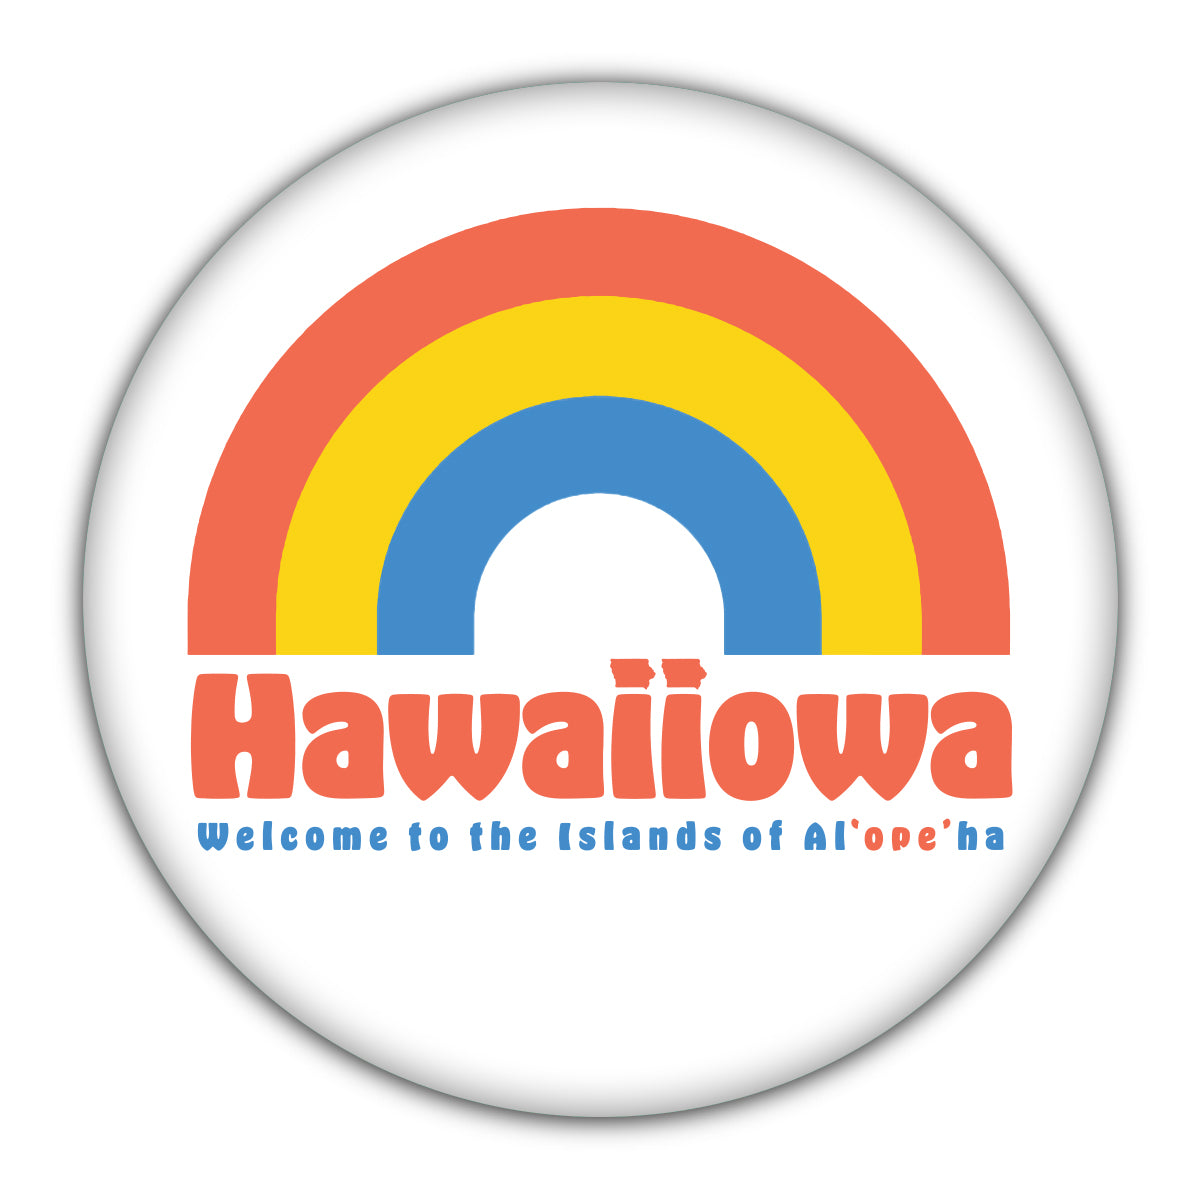 Hawiiowa Round Coaster - Bozz Prints